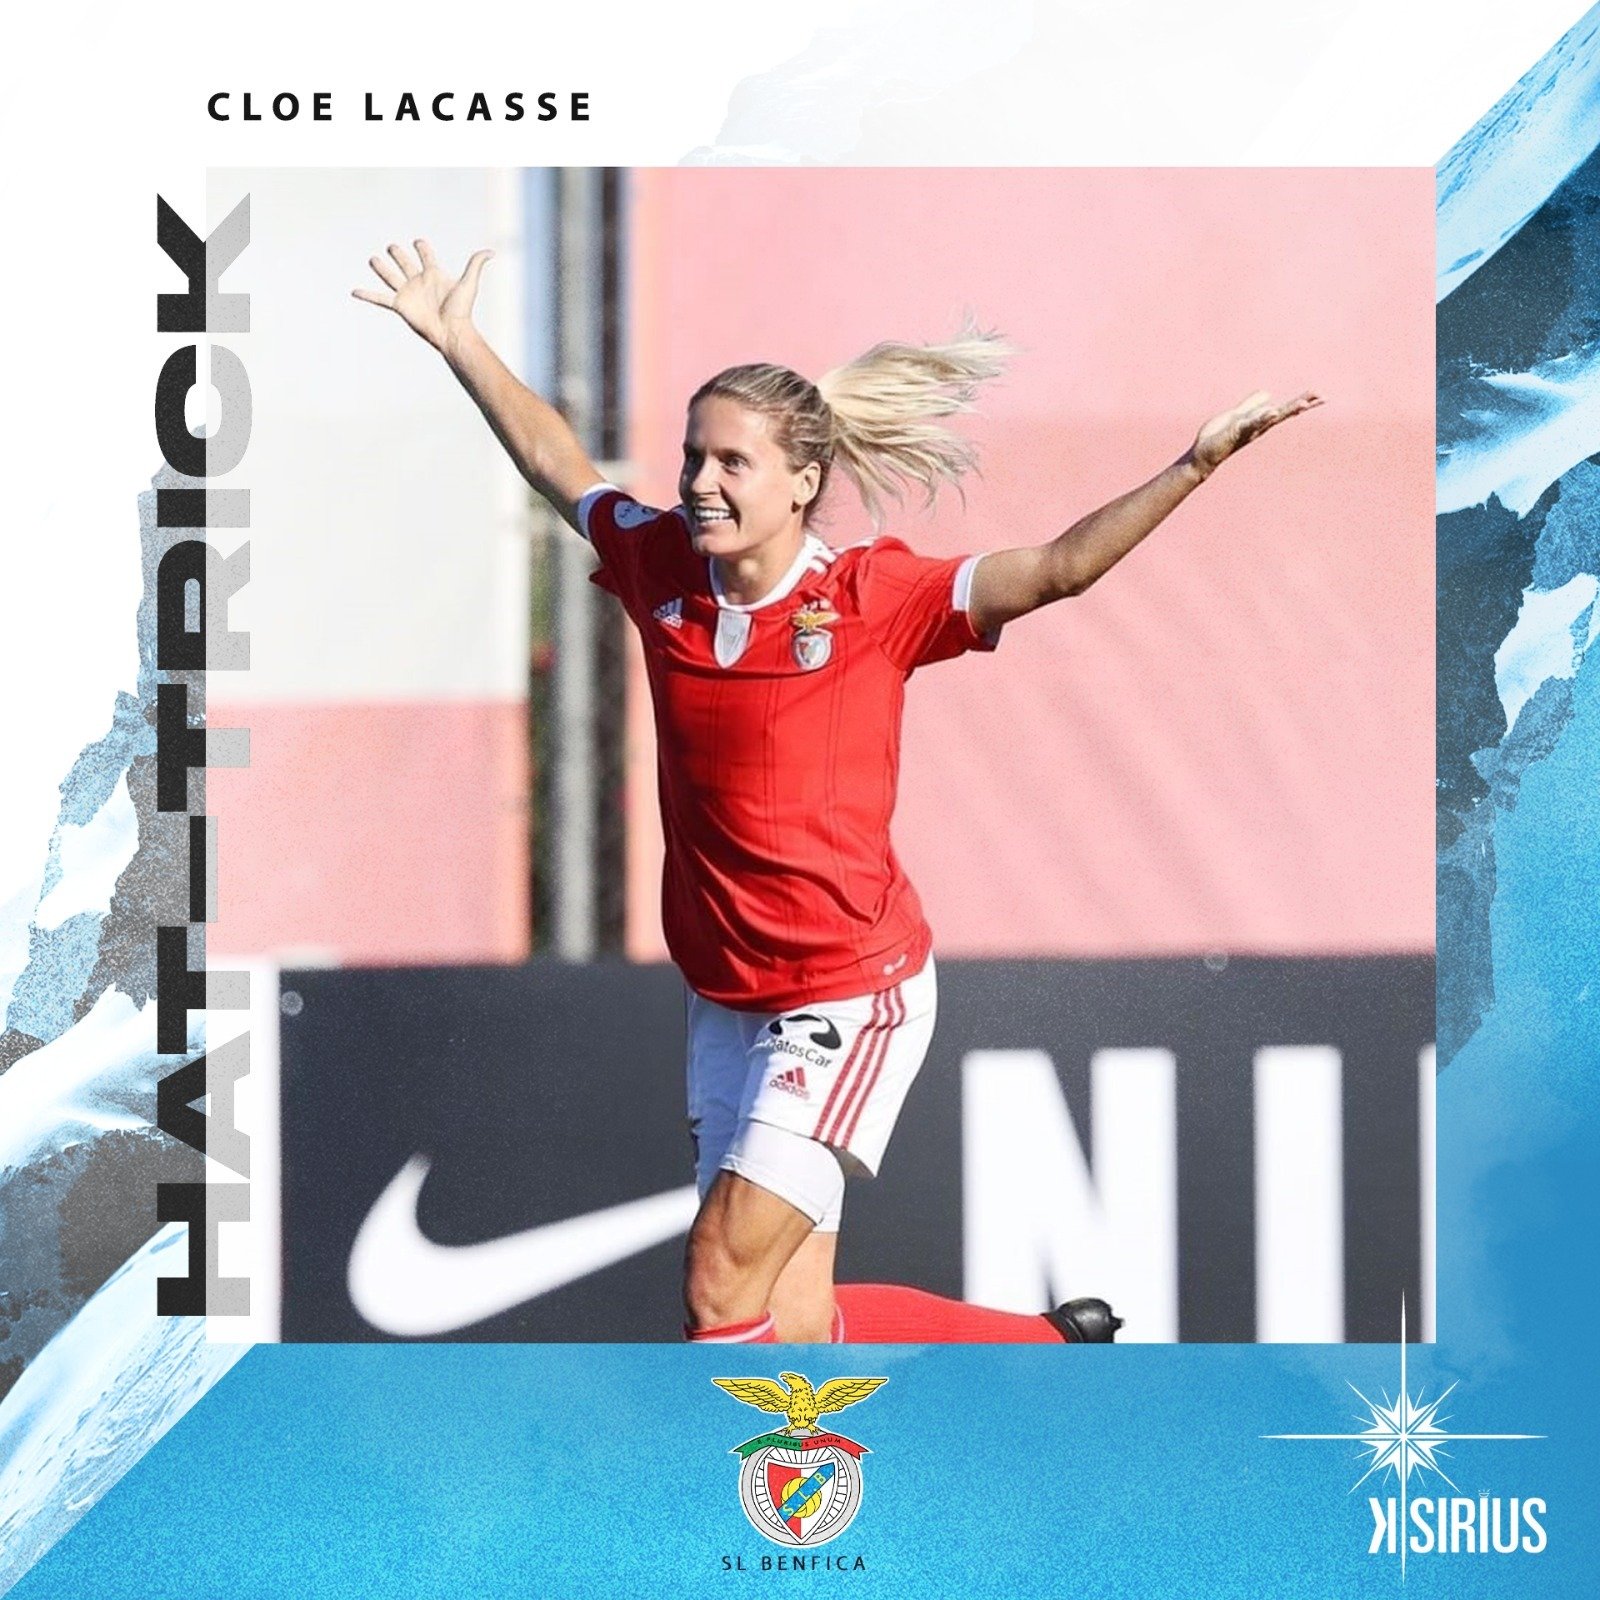 Hat-Trick: Cloe Lacasse (SL Benfica)